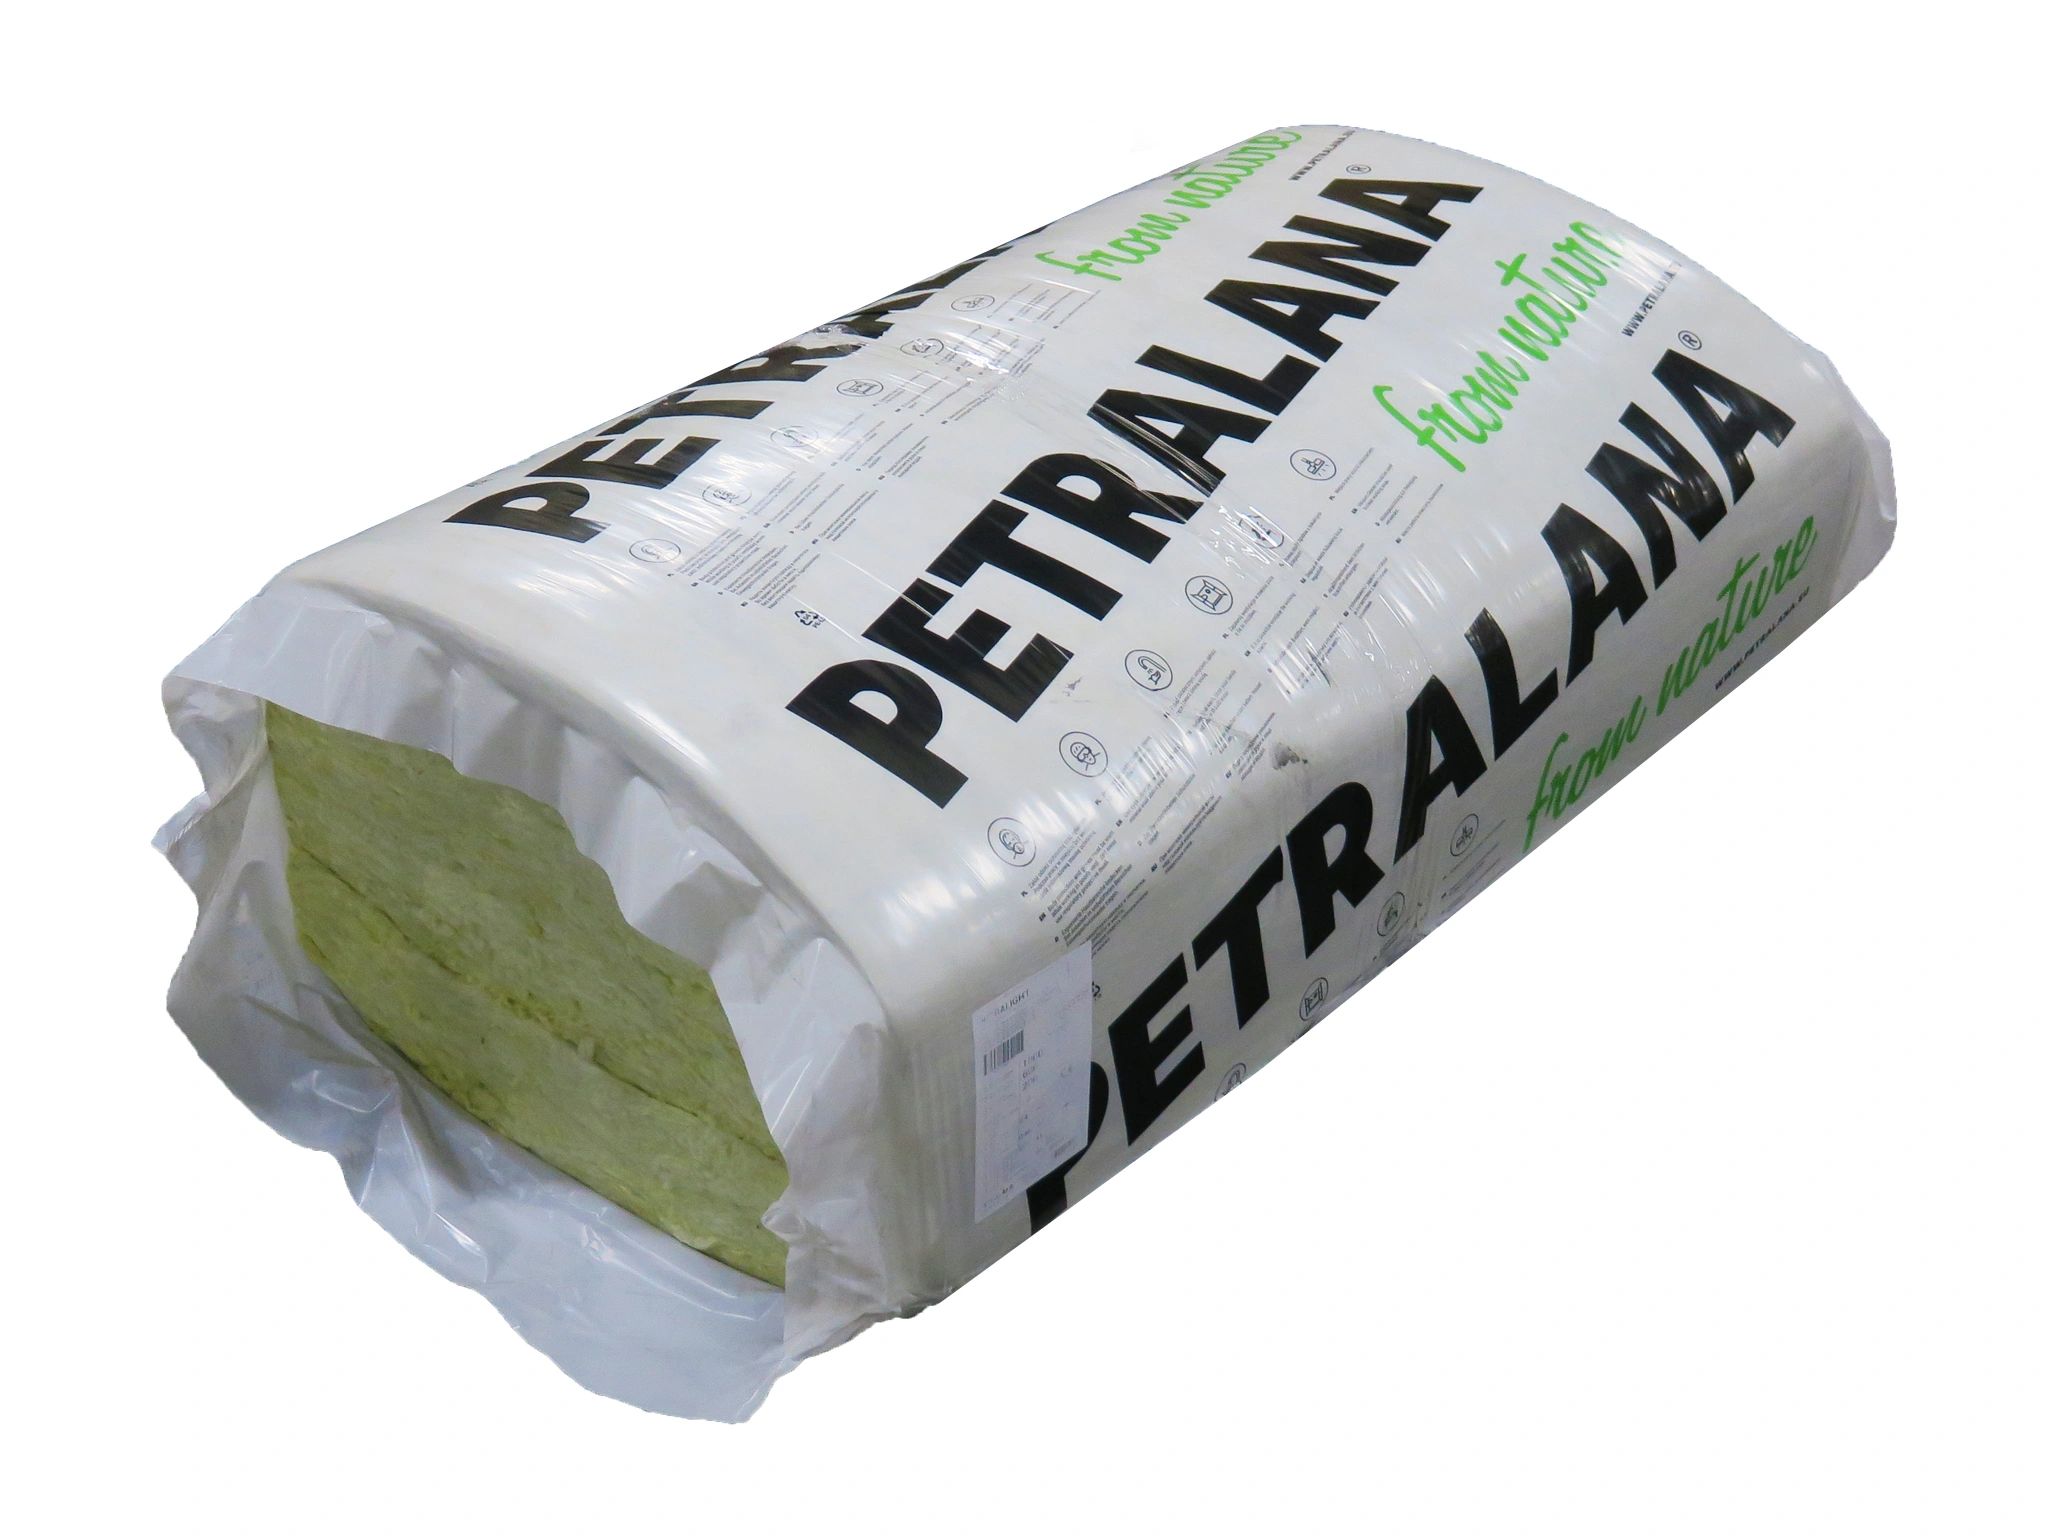 B-keus Petralight steenwolplaat 1000x600x150mm Rd:4,25 5pl/pak (=3 m2)